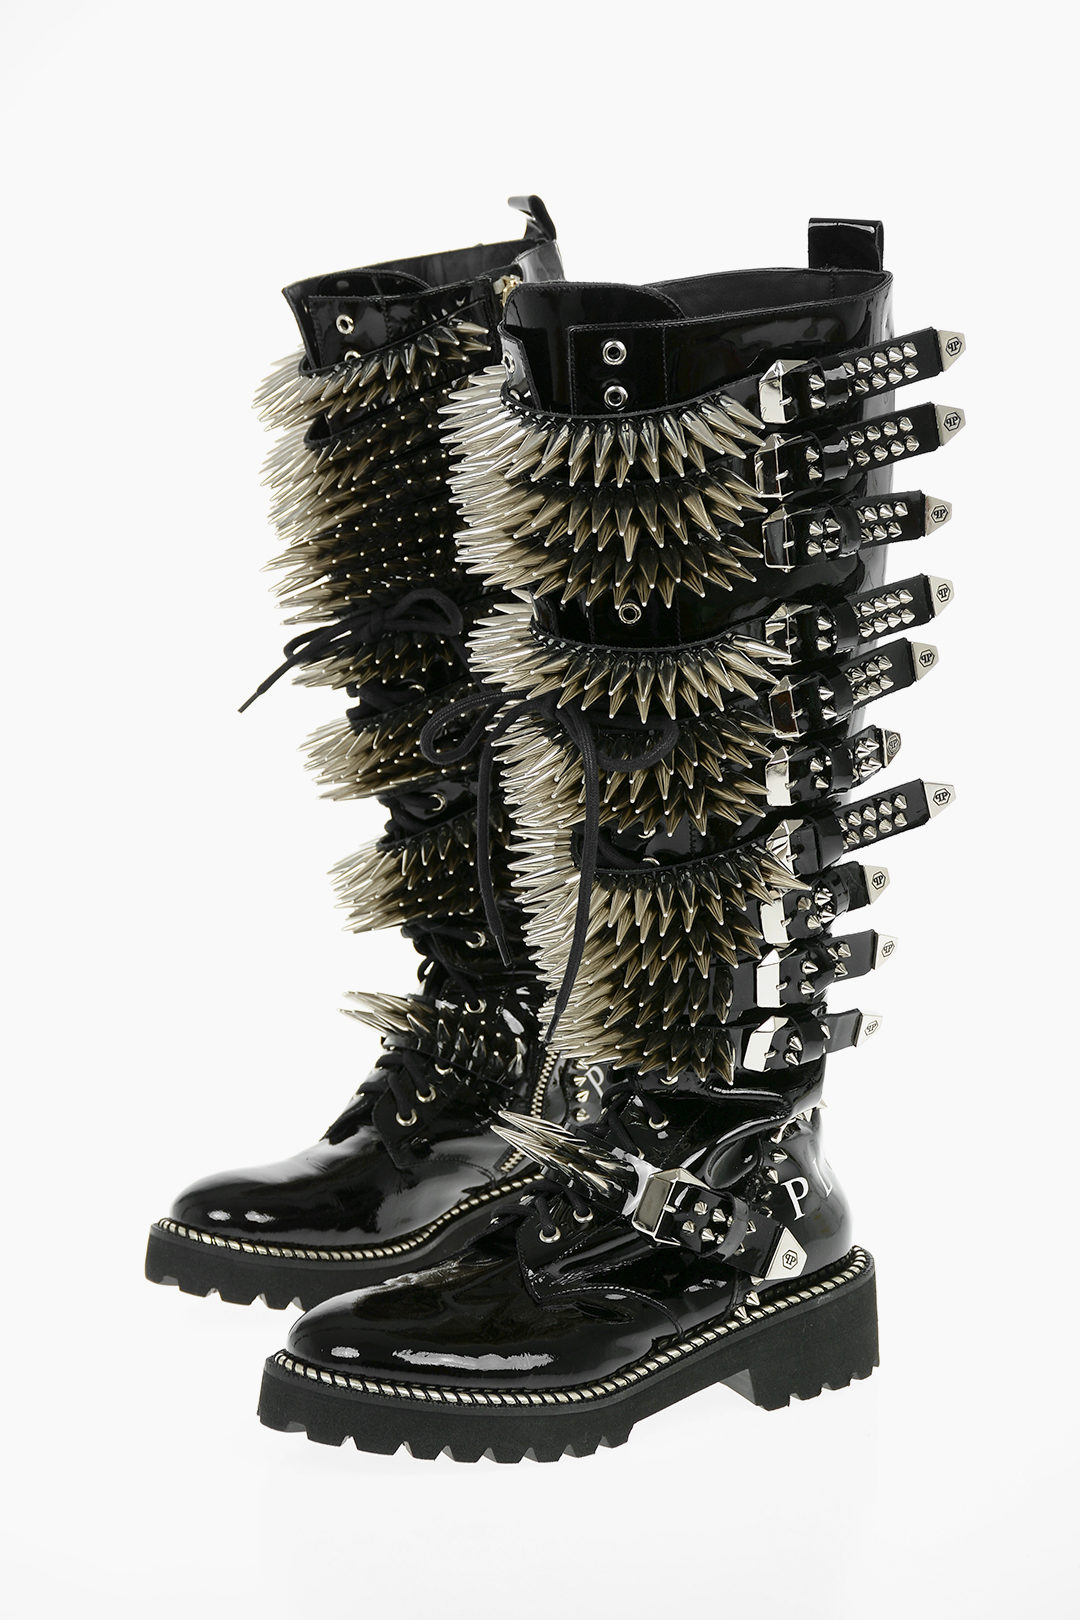 Spektakel Rechthoek Negen Philipp Plein 4,5cm Studded and Buckles Lace Up Boots women - Glamood Outlet